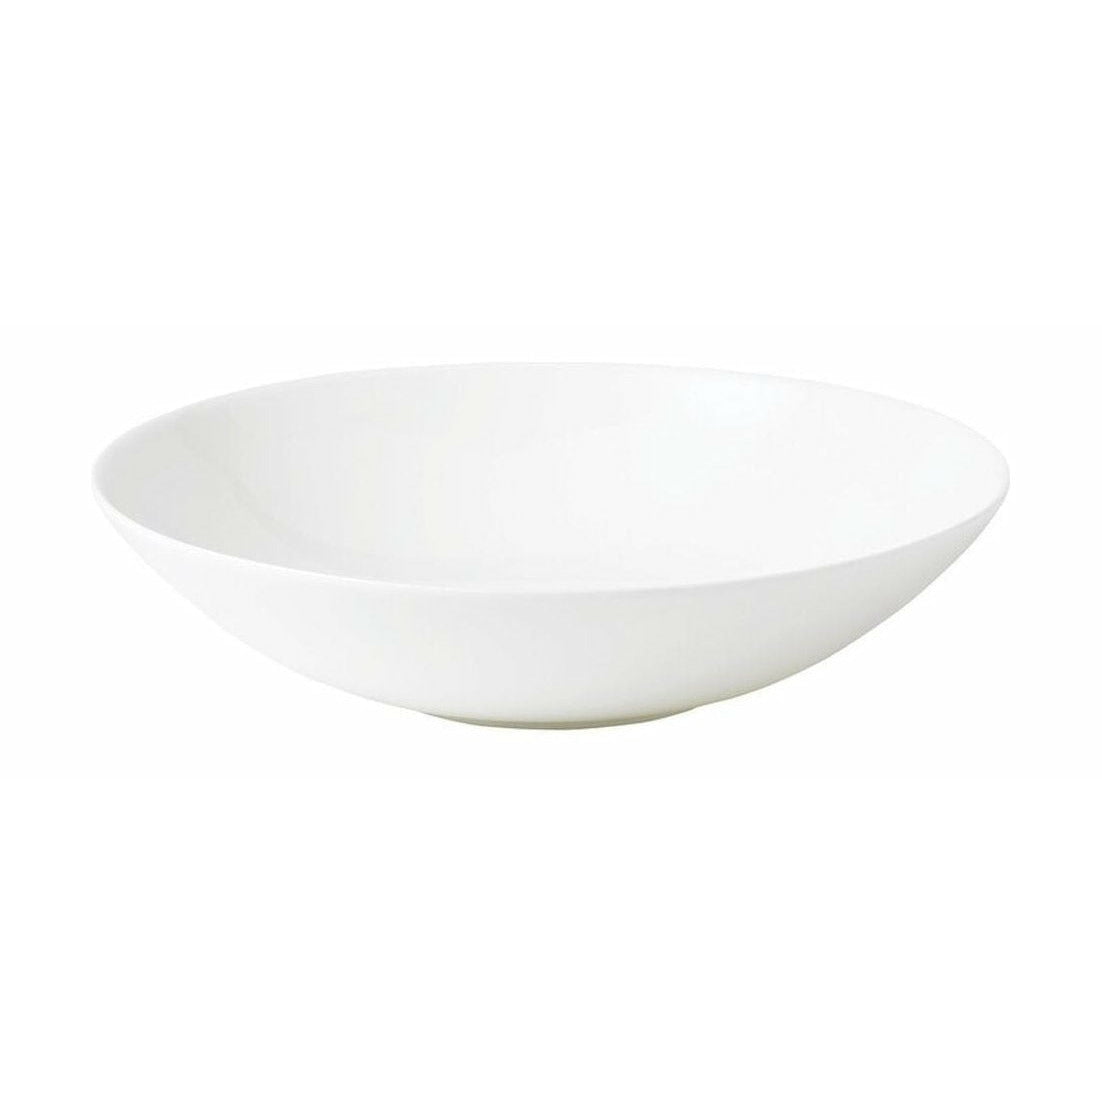 Bowl de pâtes White White Wedgwood Jasper Conran, Ø: 25 cm